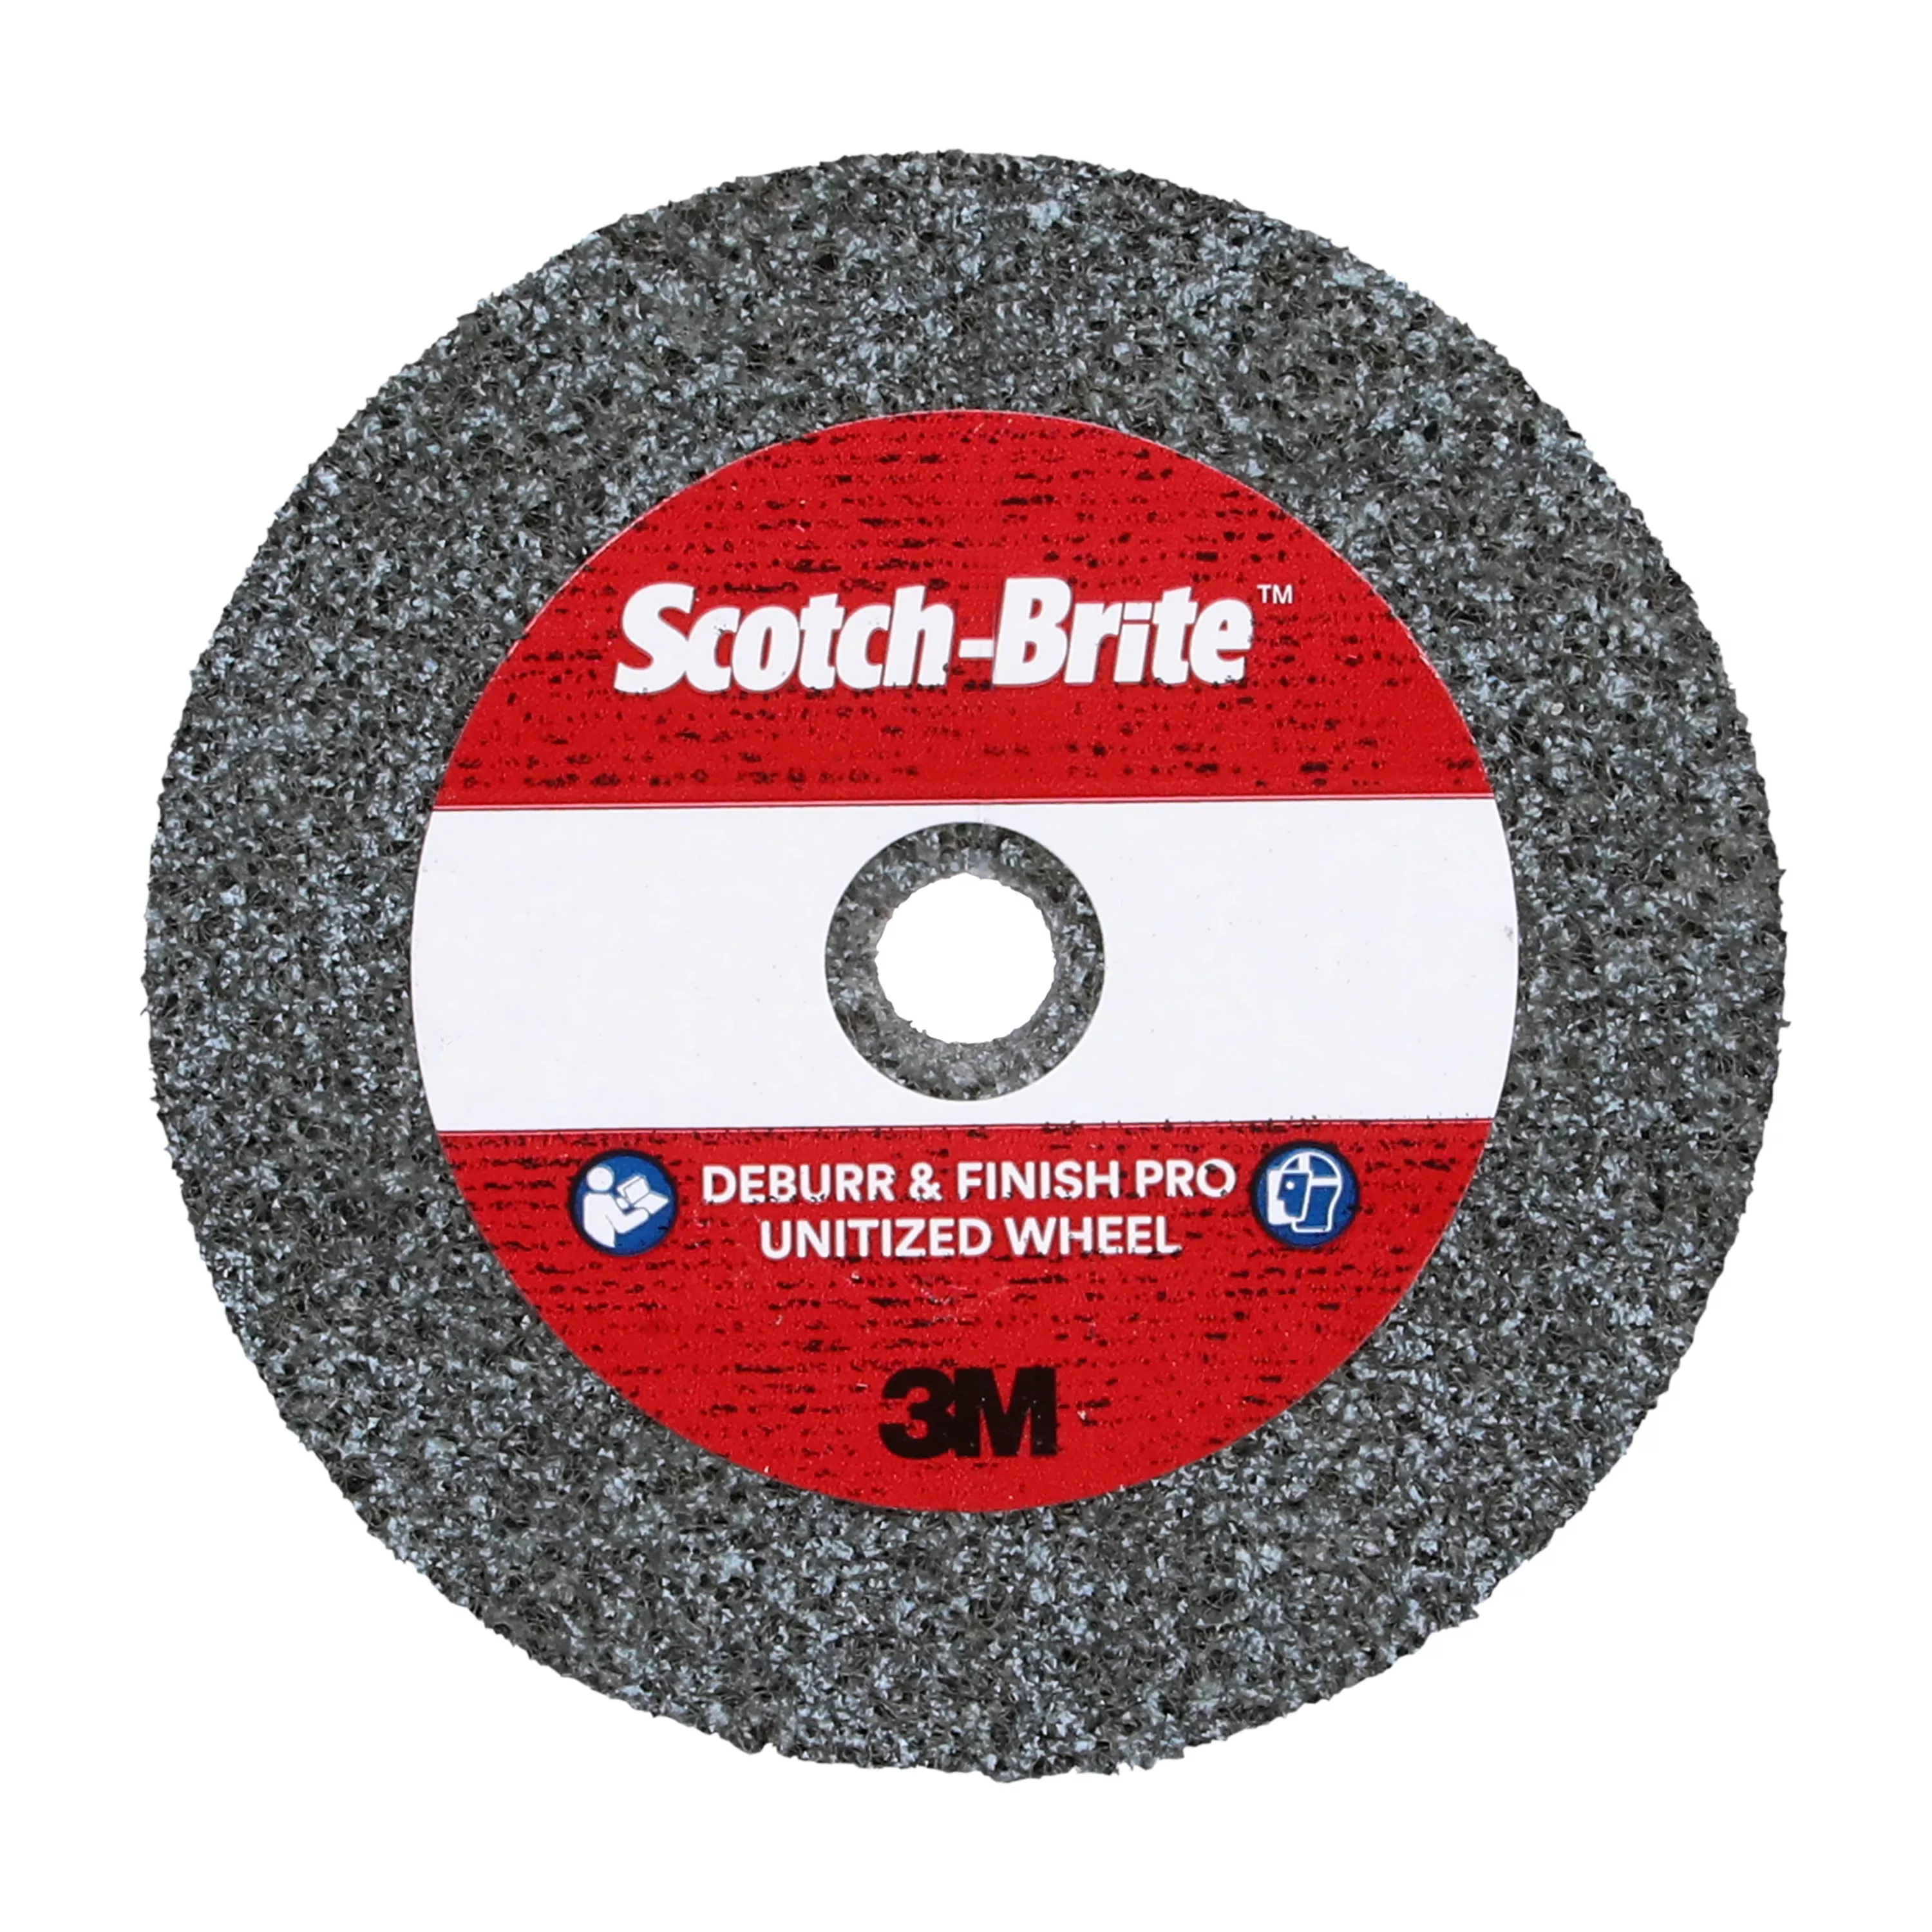 SKU 7100053413 | Scotch-Brite™ Deburr & Finish Pro Unitized Wheel